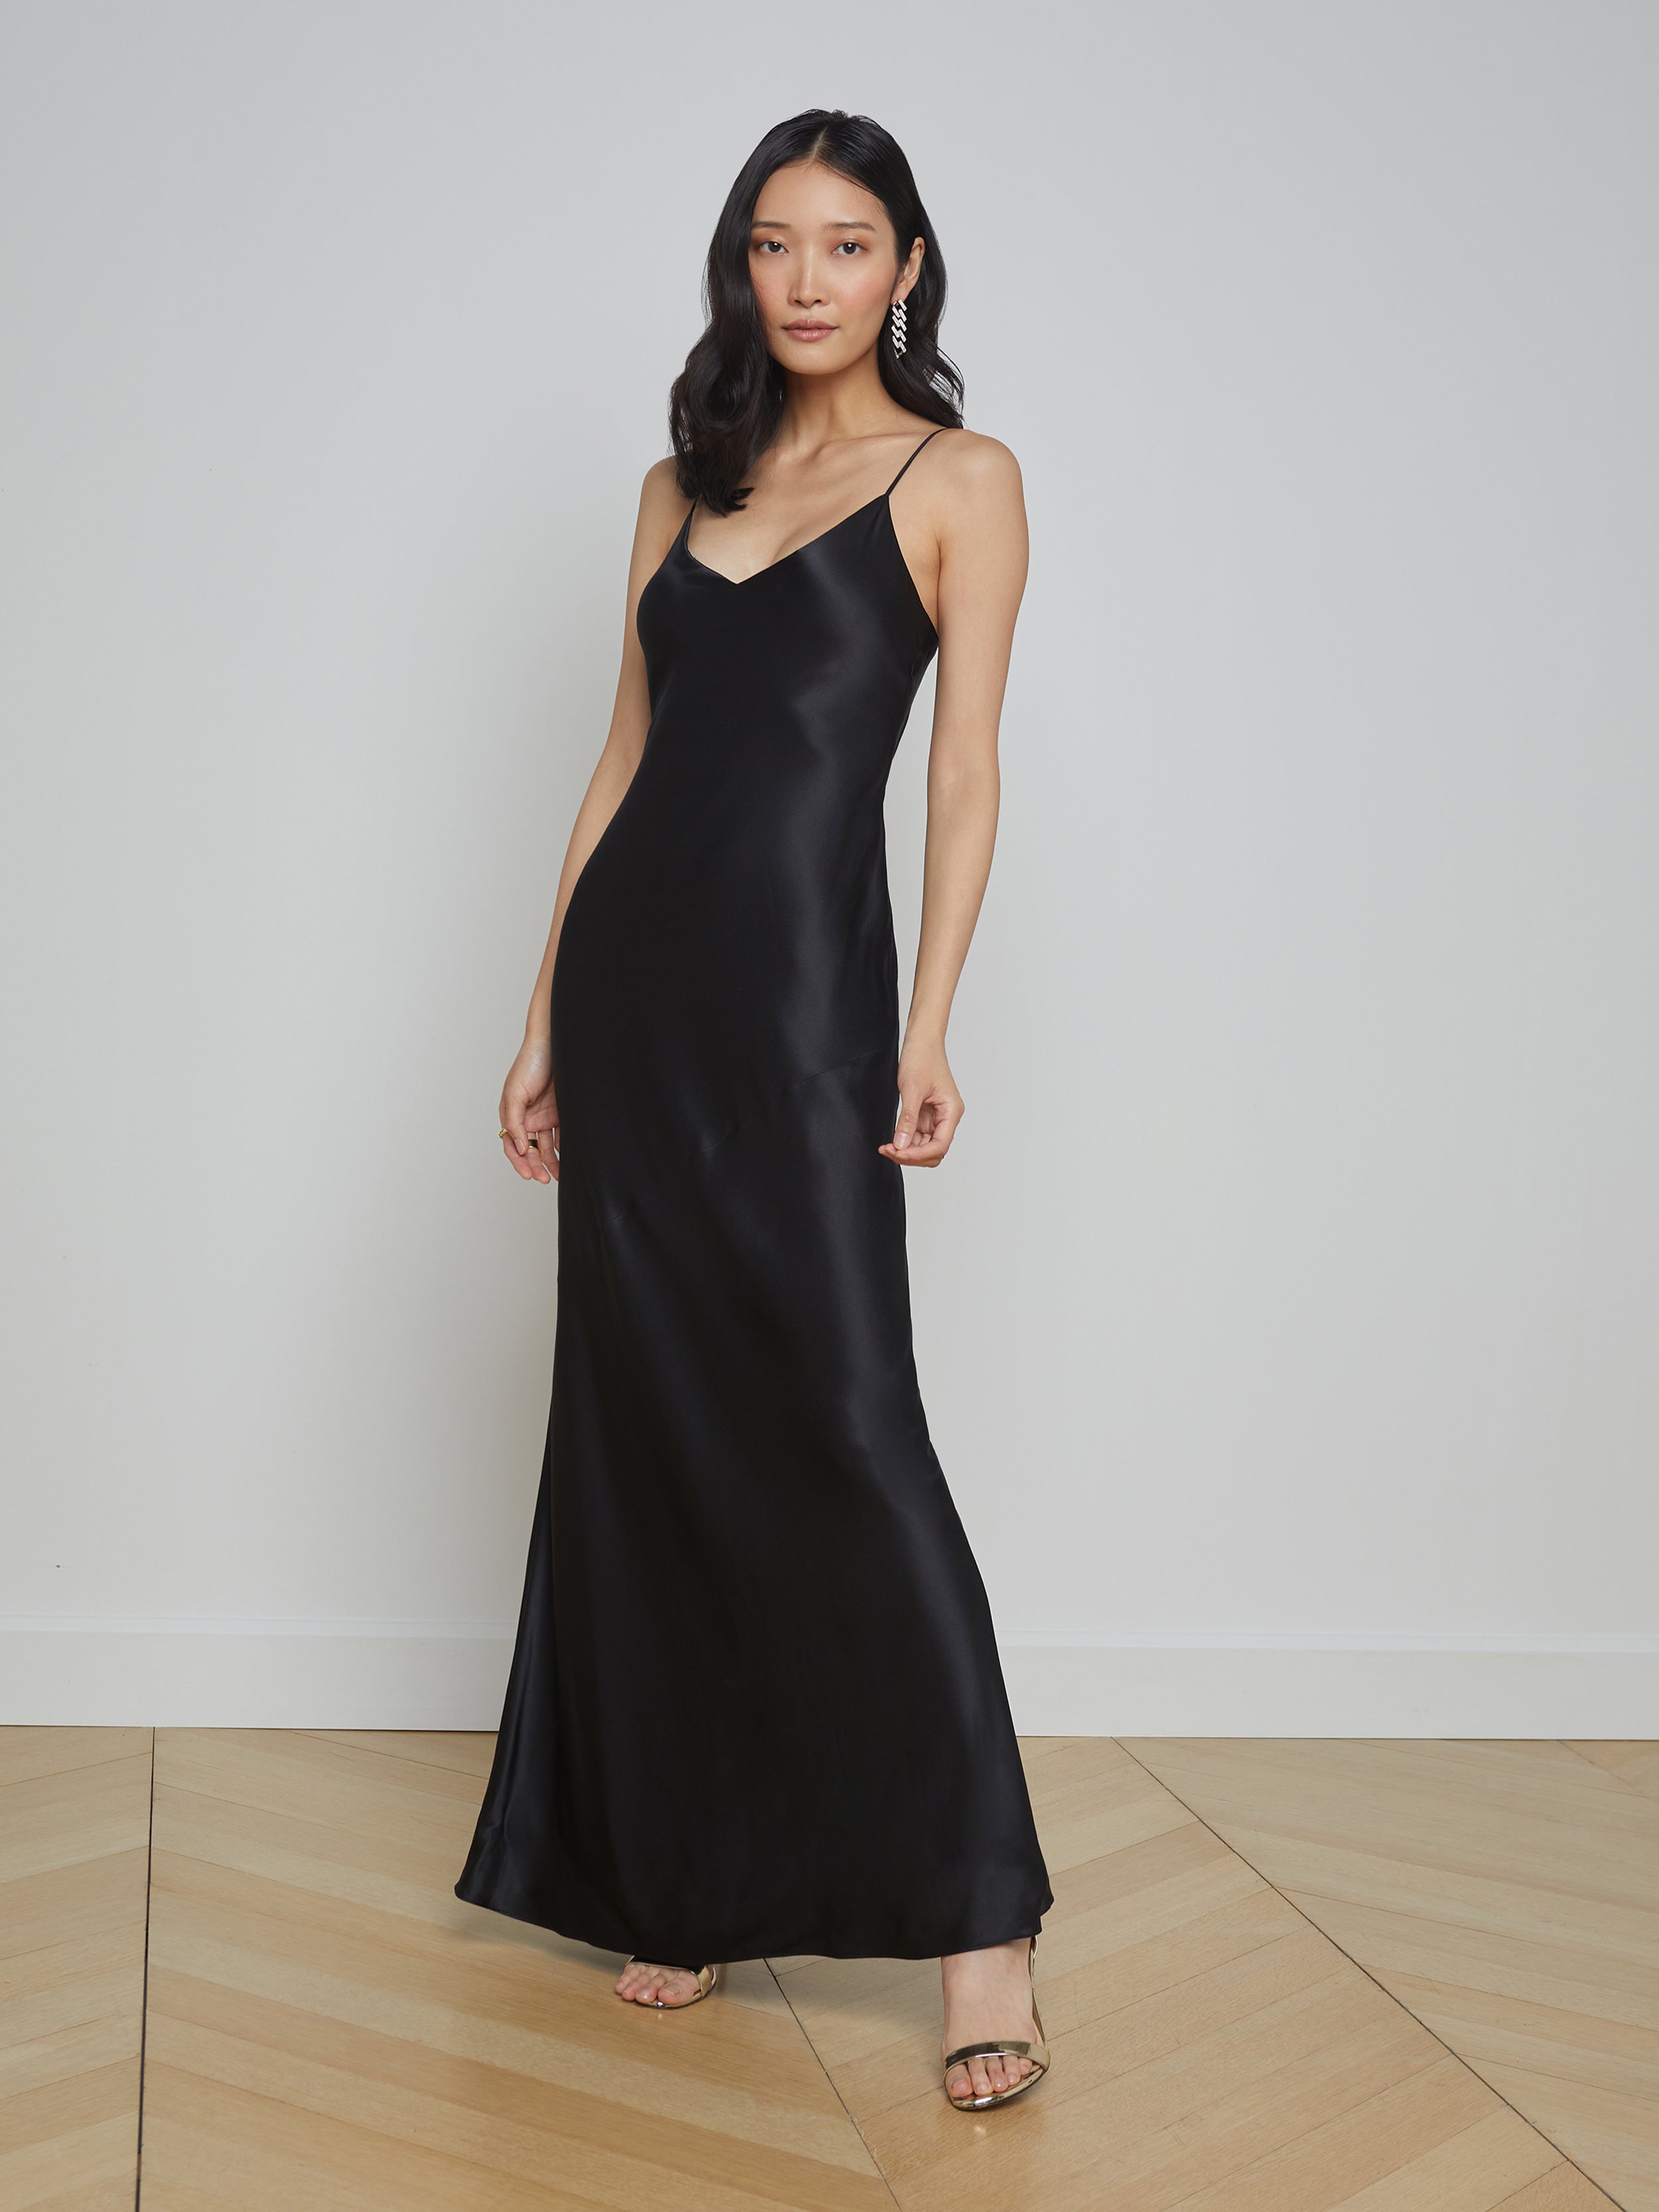 silk black dress